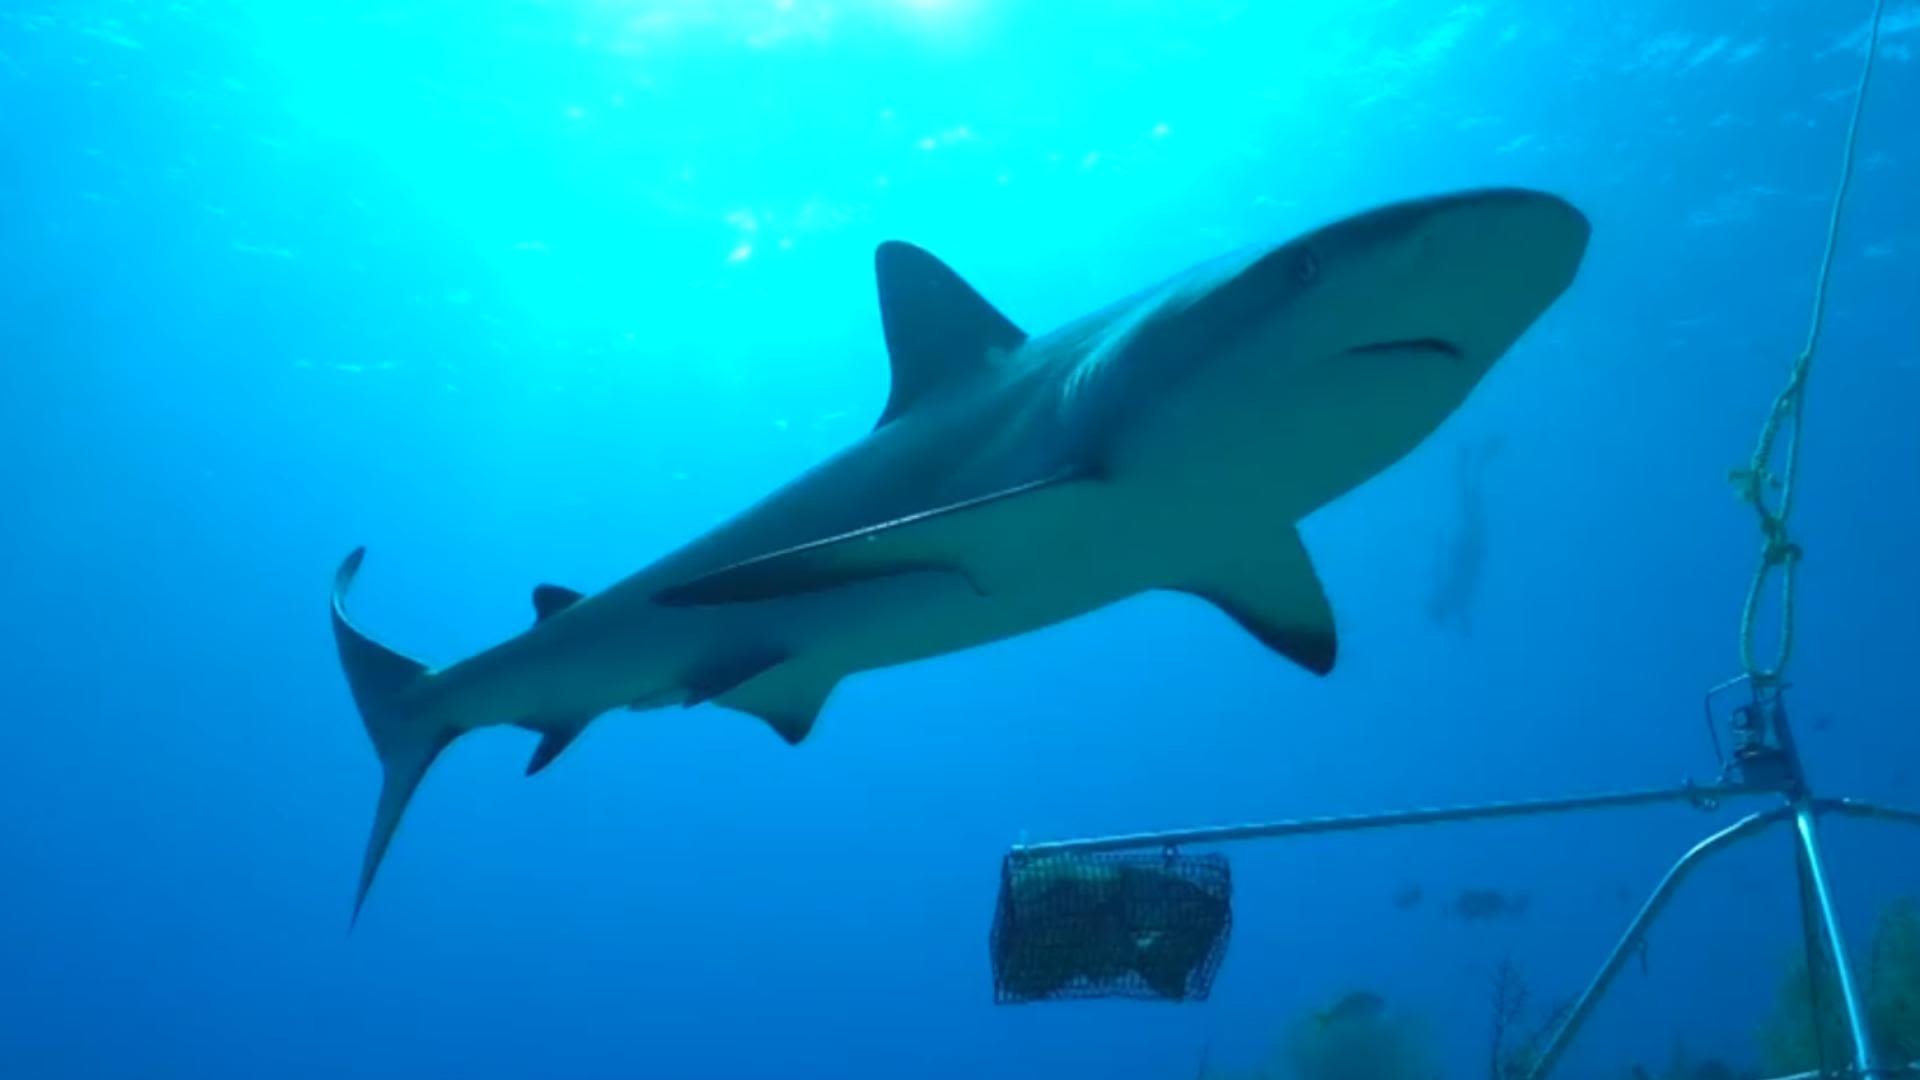 "Cocaine sharks": Predators off Brazil coast test positive for drug